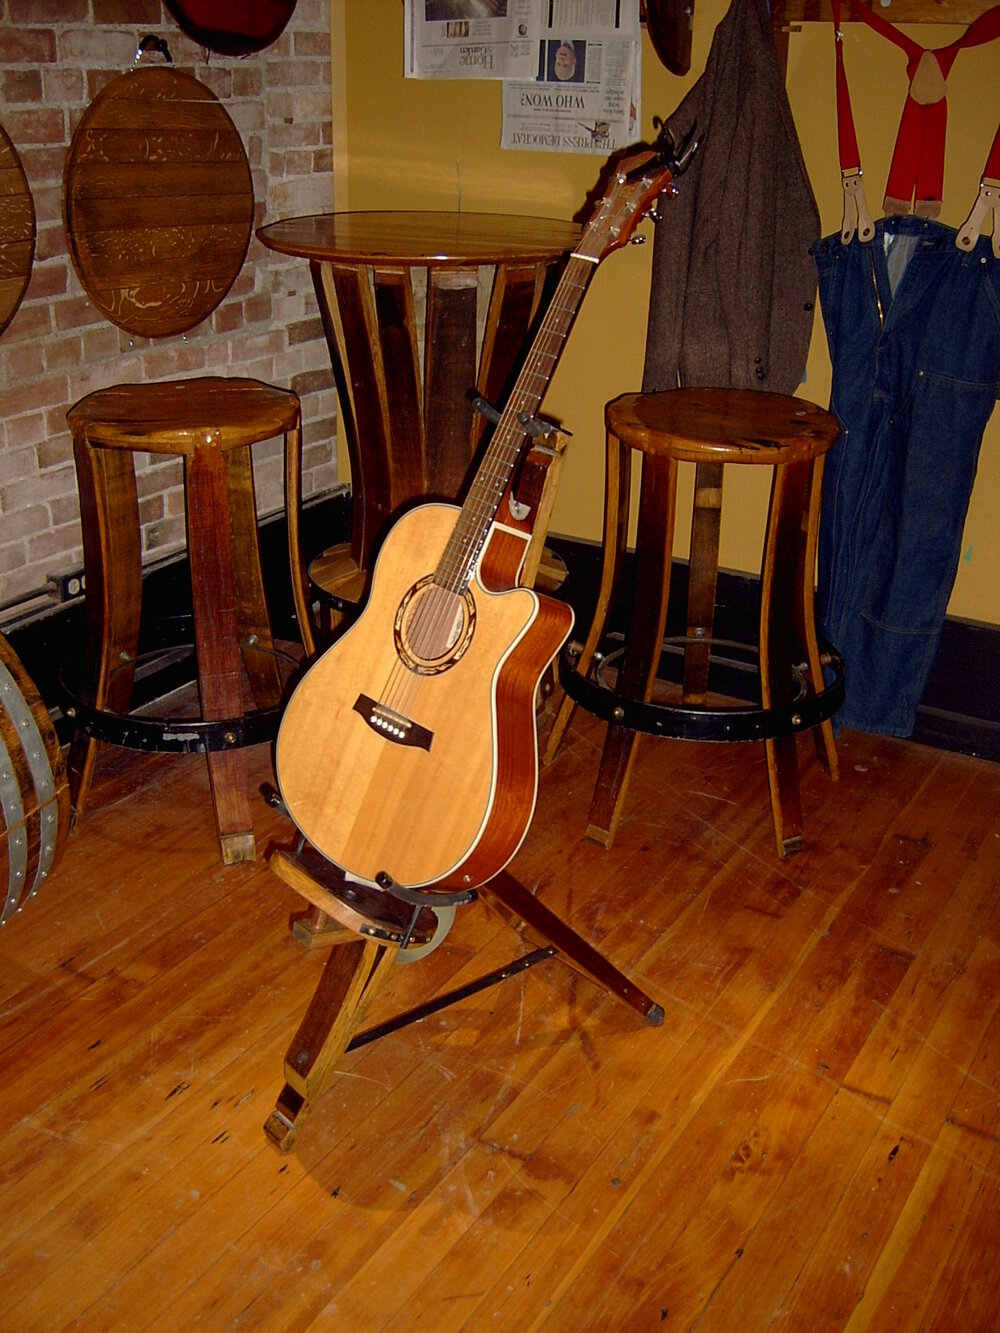 Whiskey Barrel Stave 2 Guitar Hanger